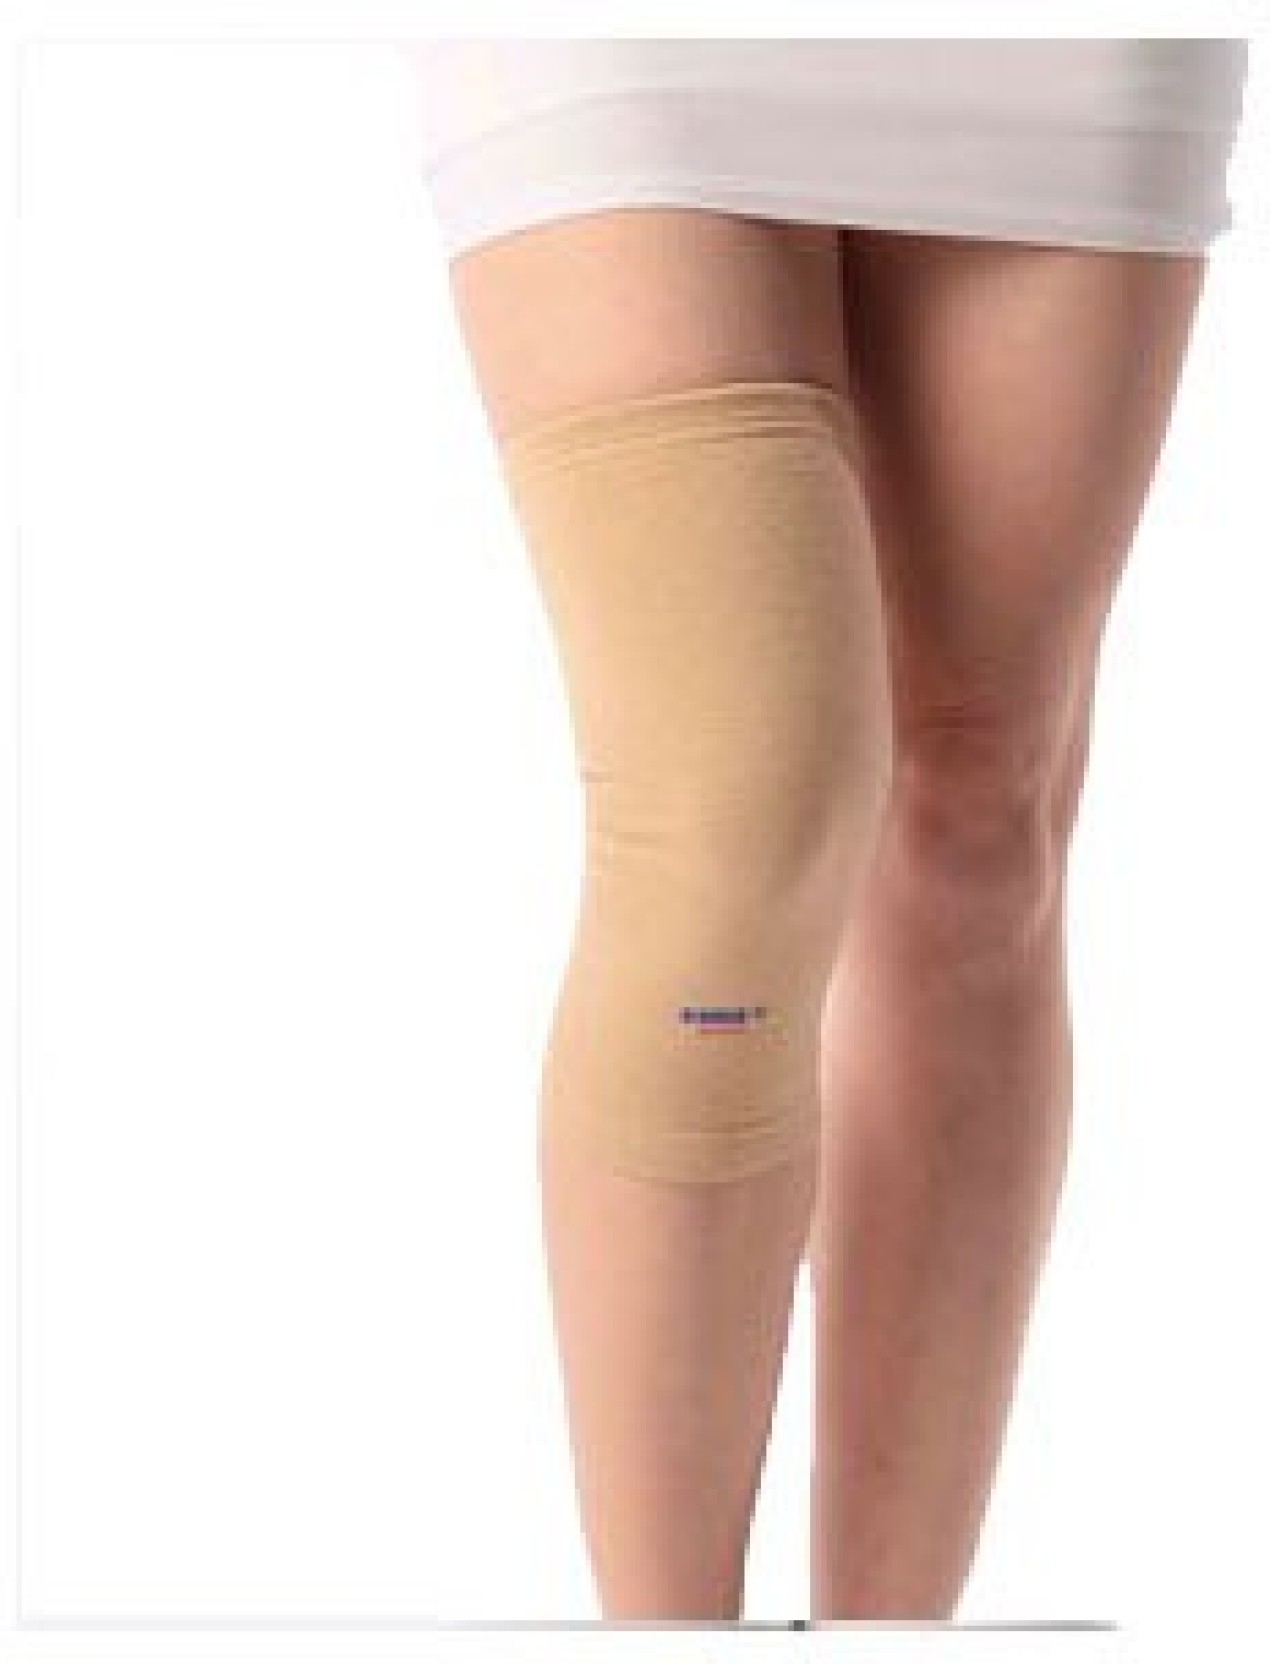 Elastic Tubular Knee Cap (Pair)